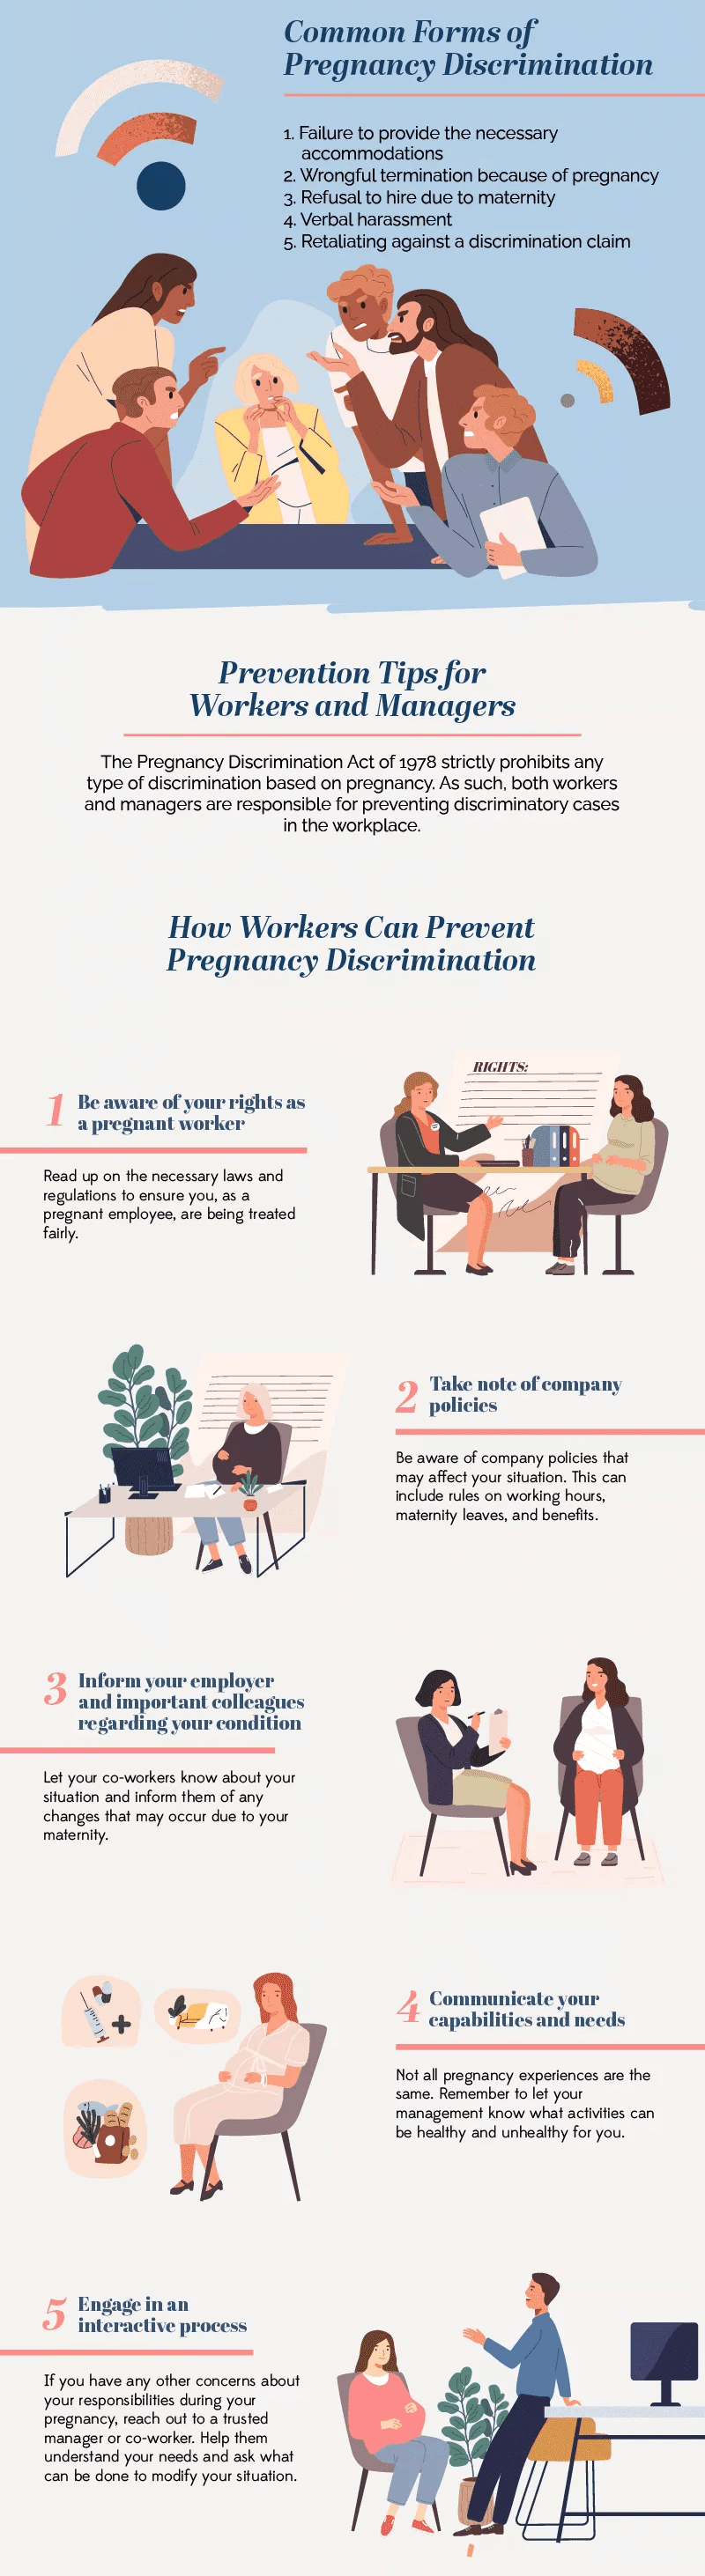 Common Fomrs of Pregnancy Discrimination